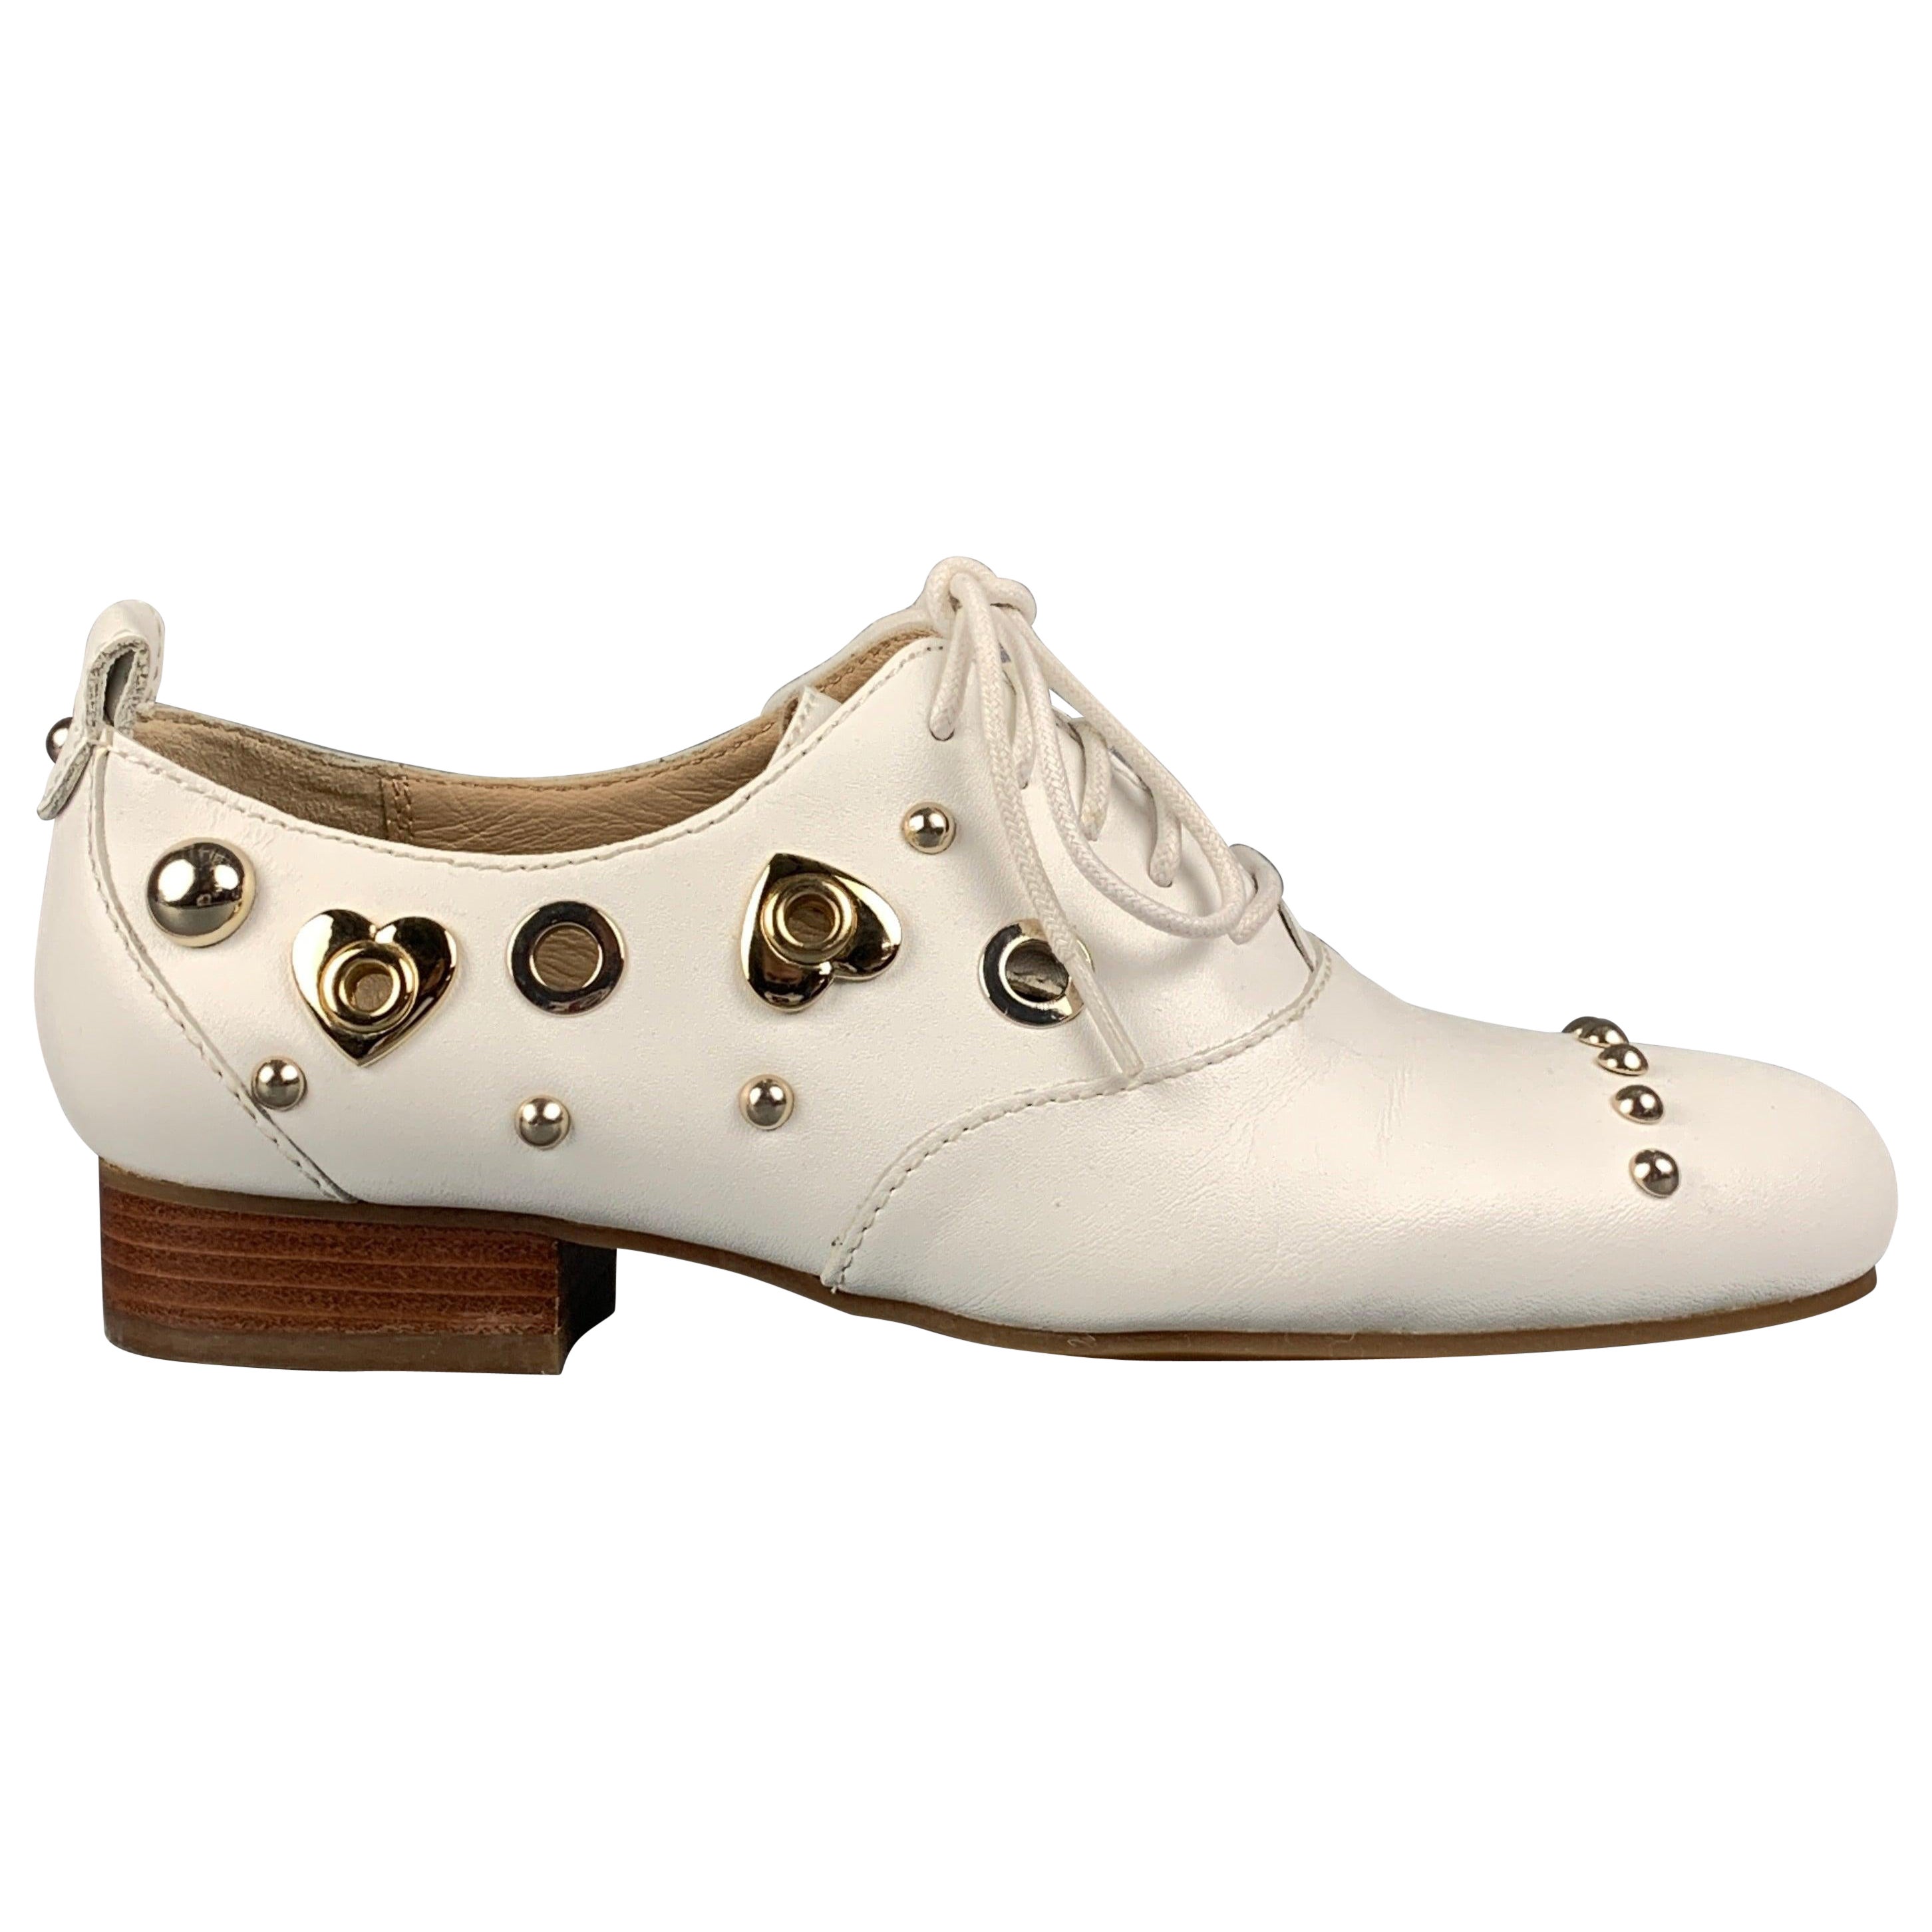 LOVE MOSCHINO - Chaussures plates cloutées en cuir blanc, taille 5,5 en vente